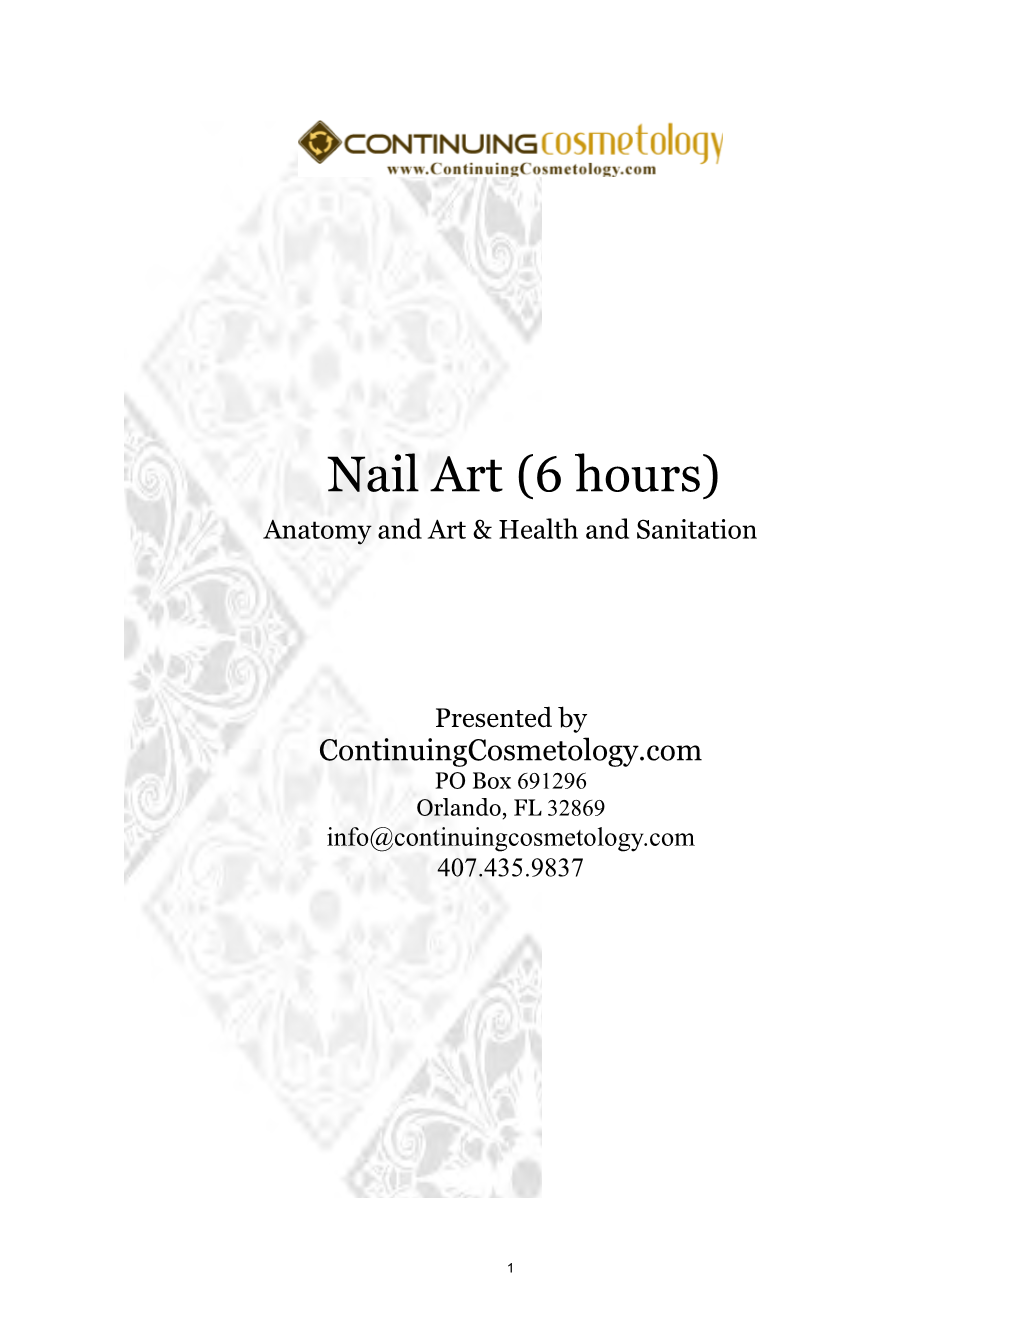 Nail Art (6 Hours) Anatomy and Art & Health and Sanitation